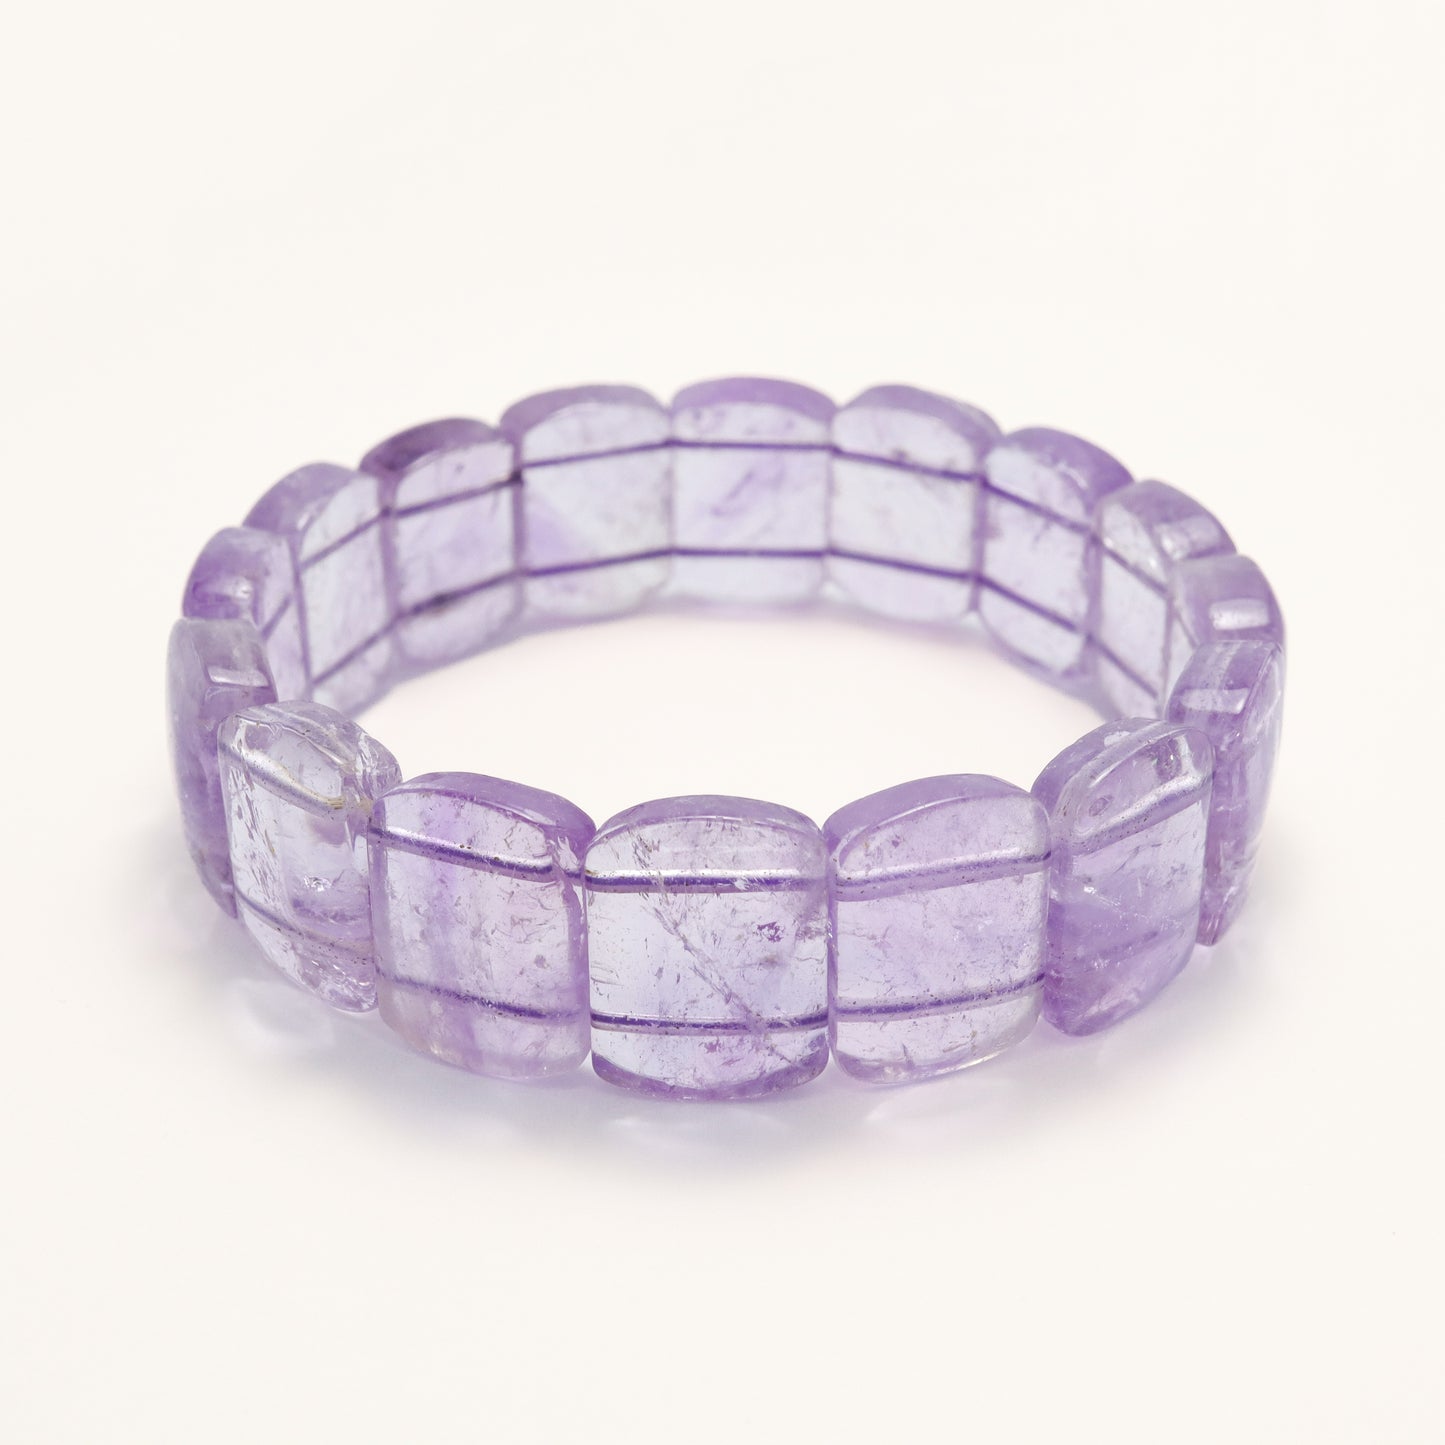 Angle Blessing - Lavender Amethyst Cube Bracelet